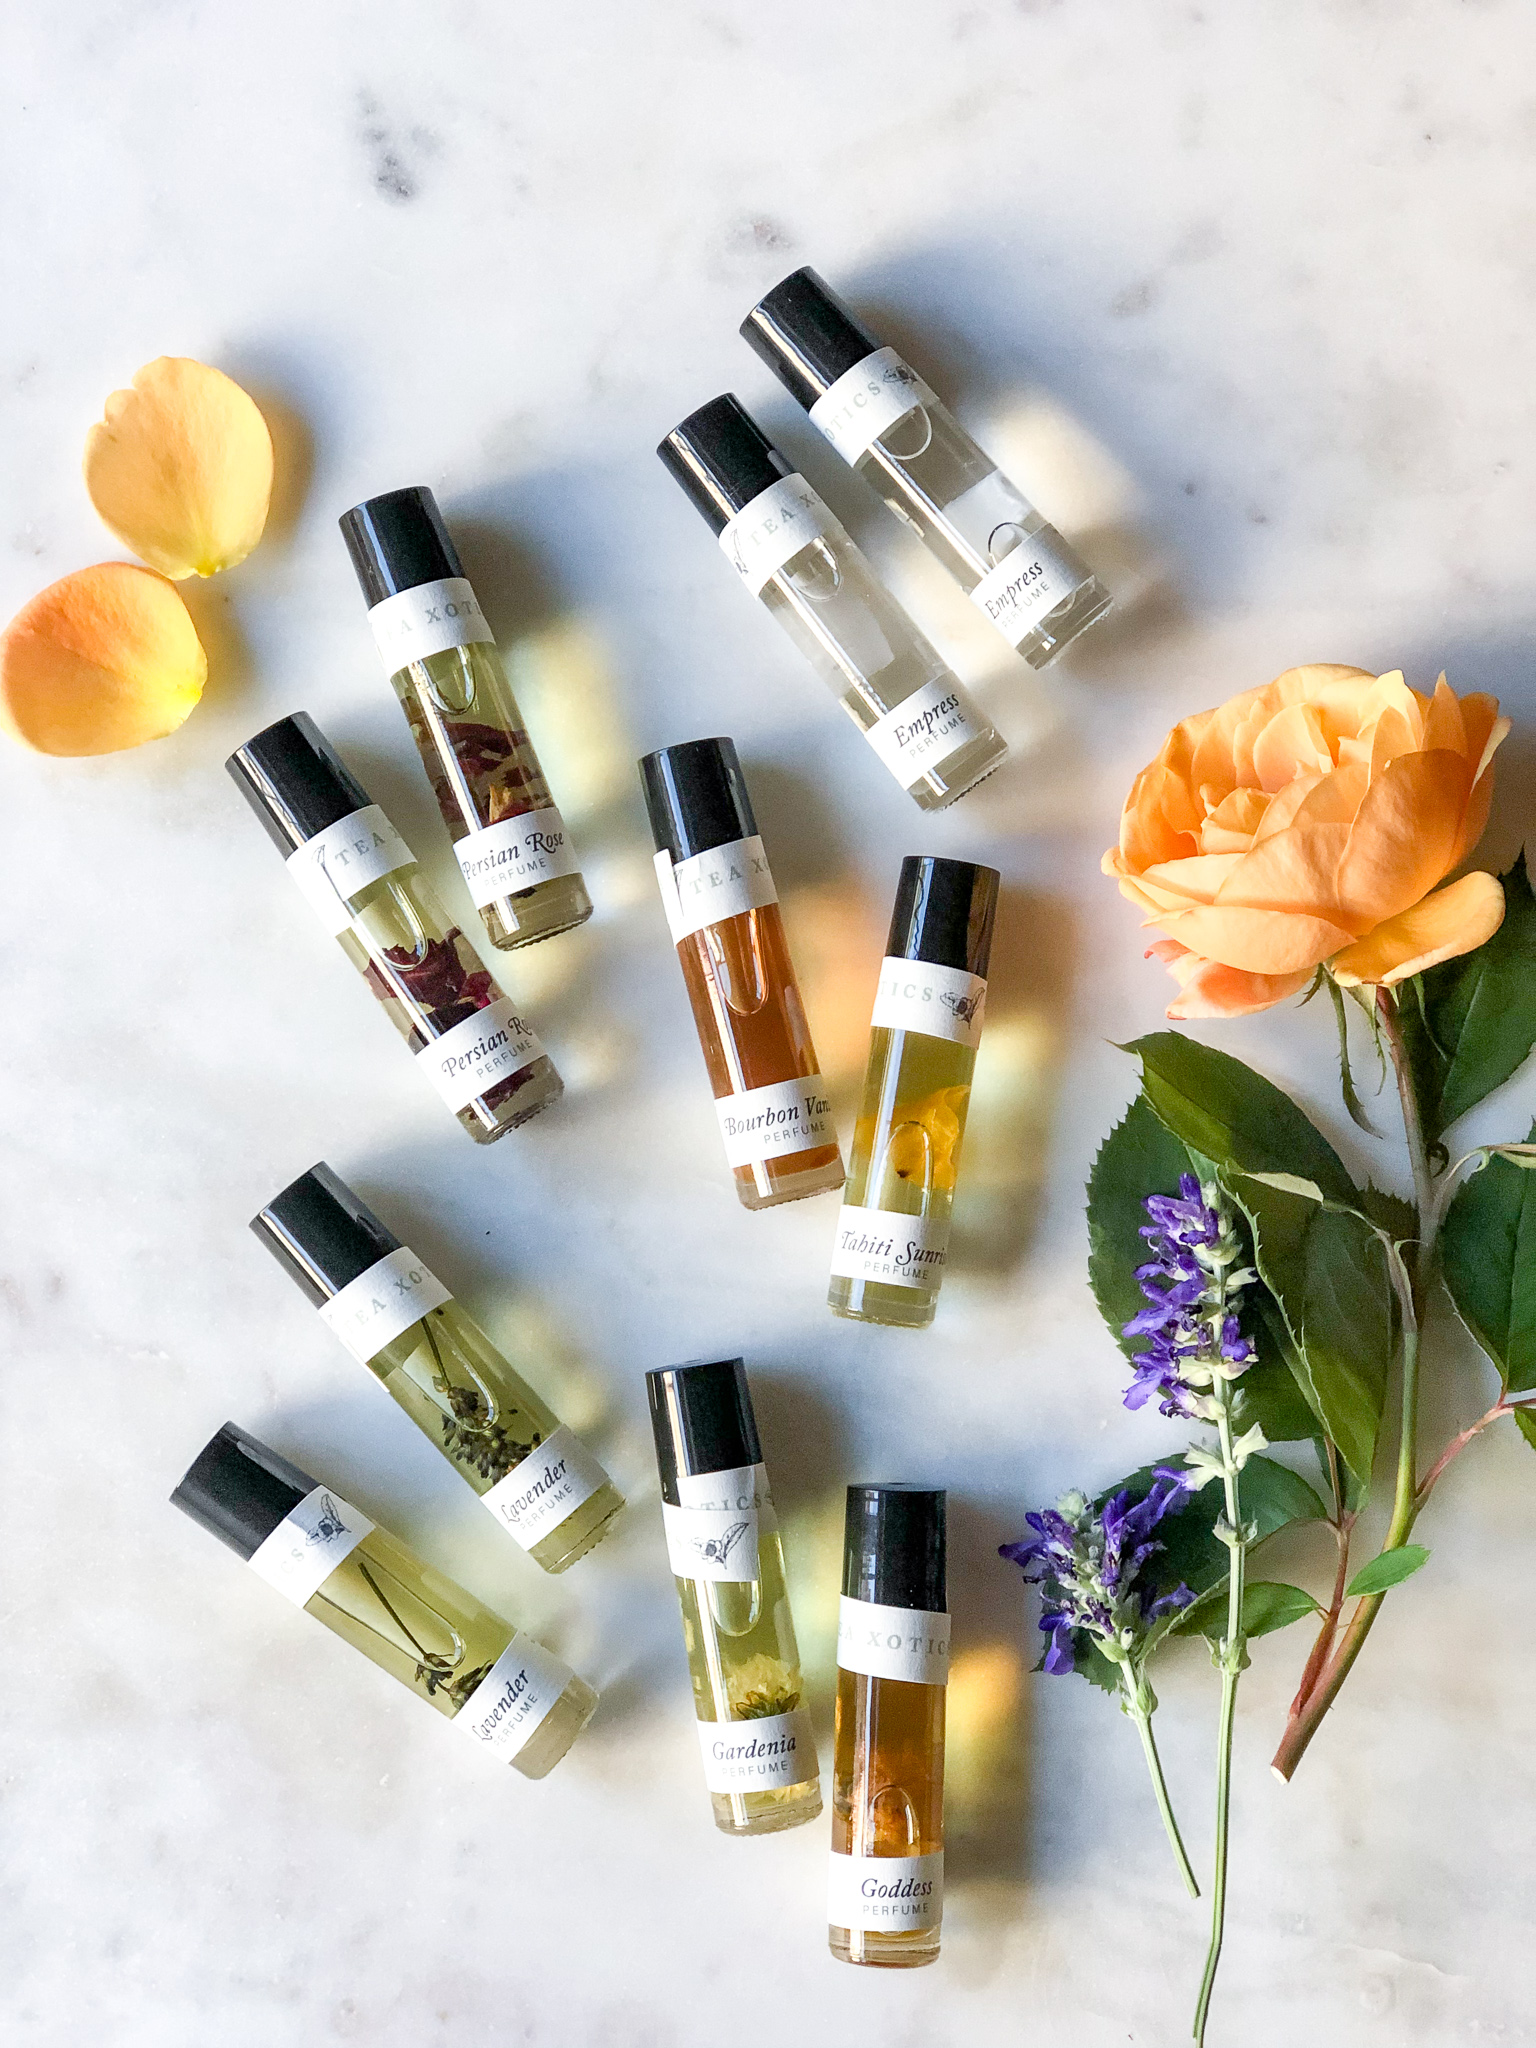 Gardenia Premium Grade Fragrance Oil - Perfume Oil - 10ml